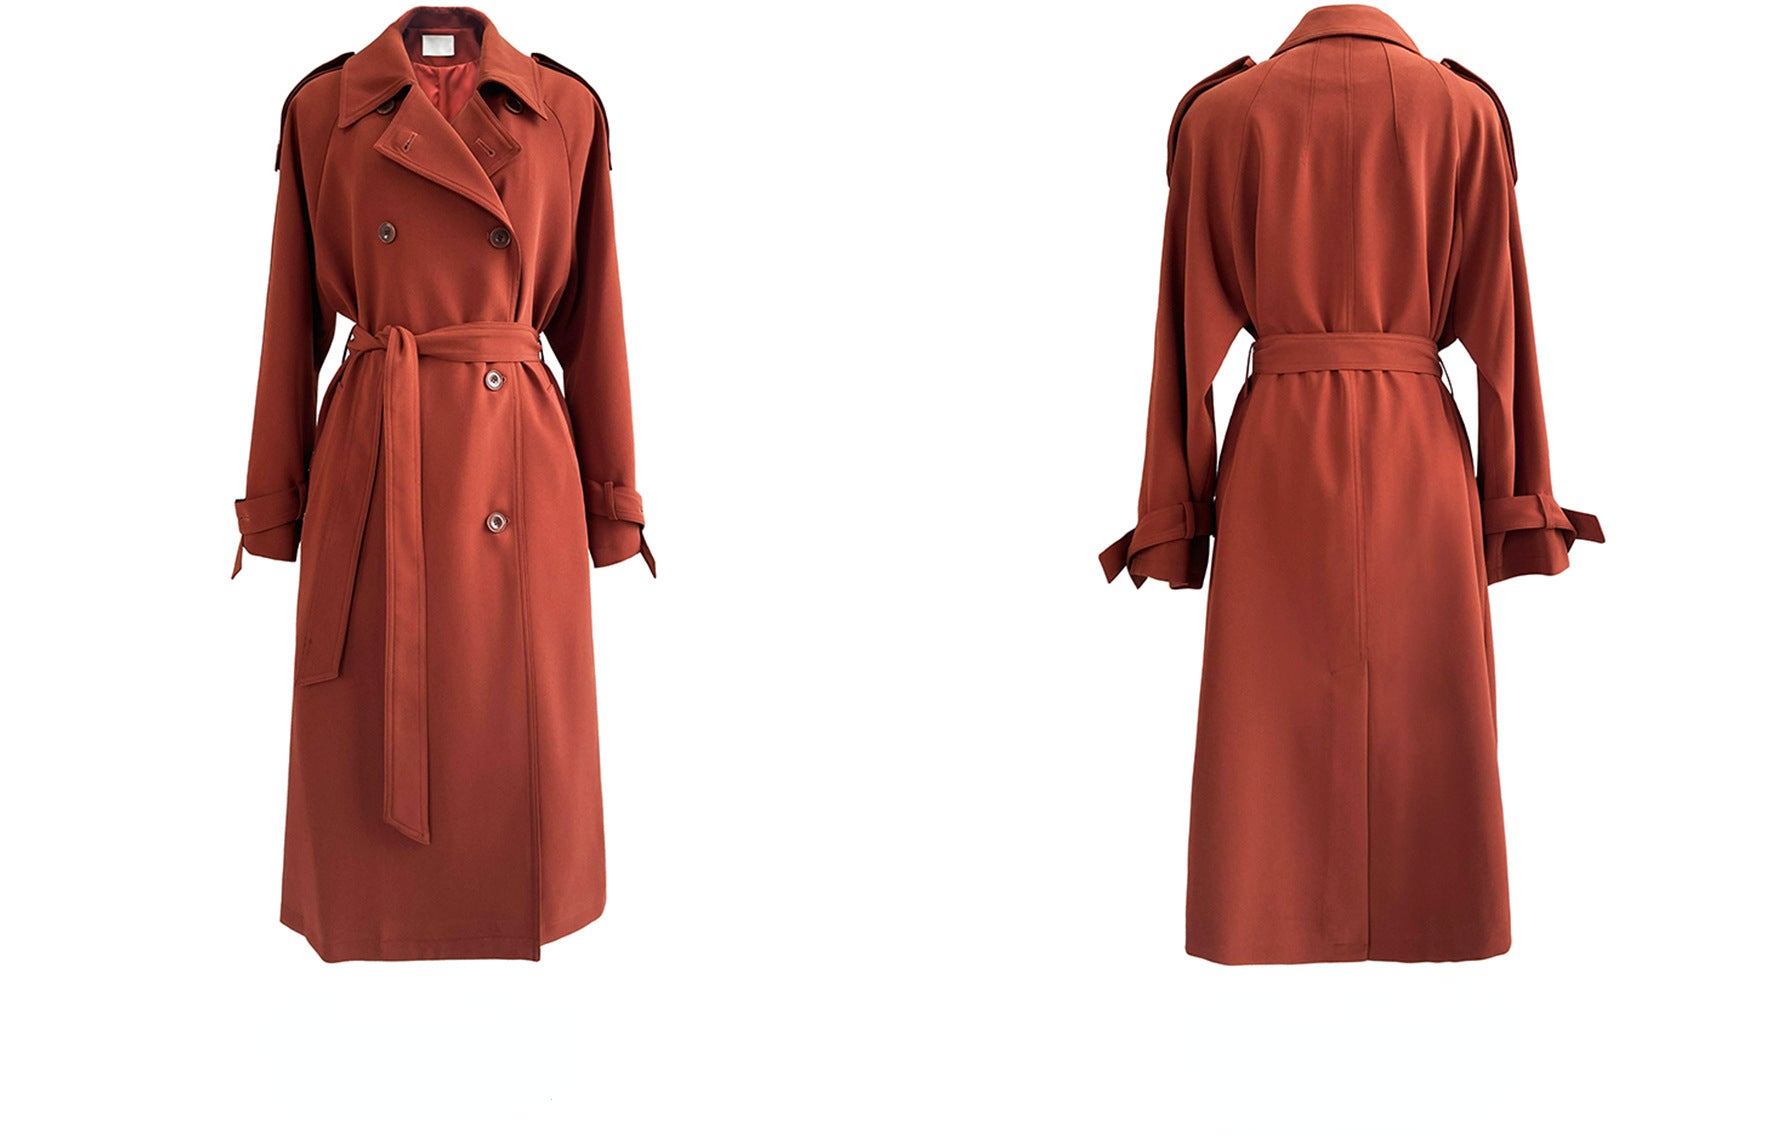 Fashion Fall Wind Break Long Overcoats for Women-Outerwear-Black-S-Free Shipping Leatheretro